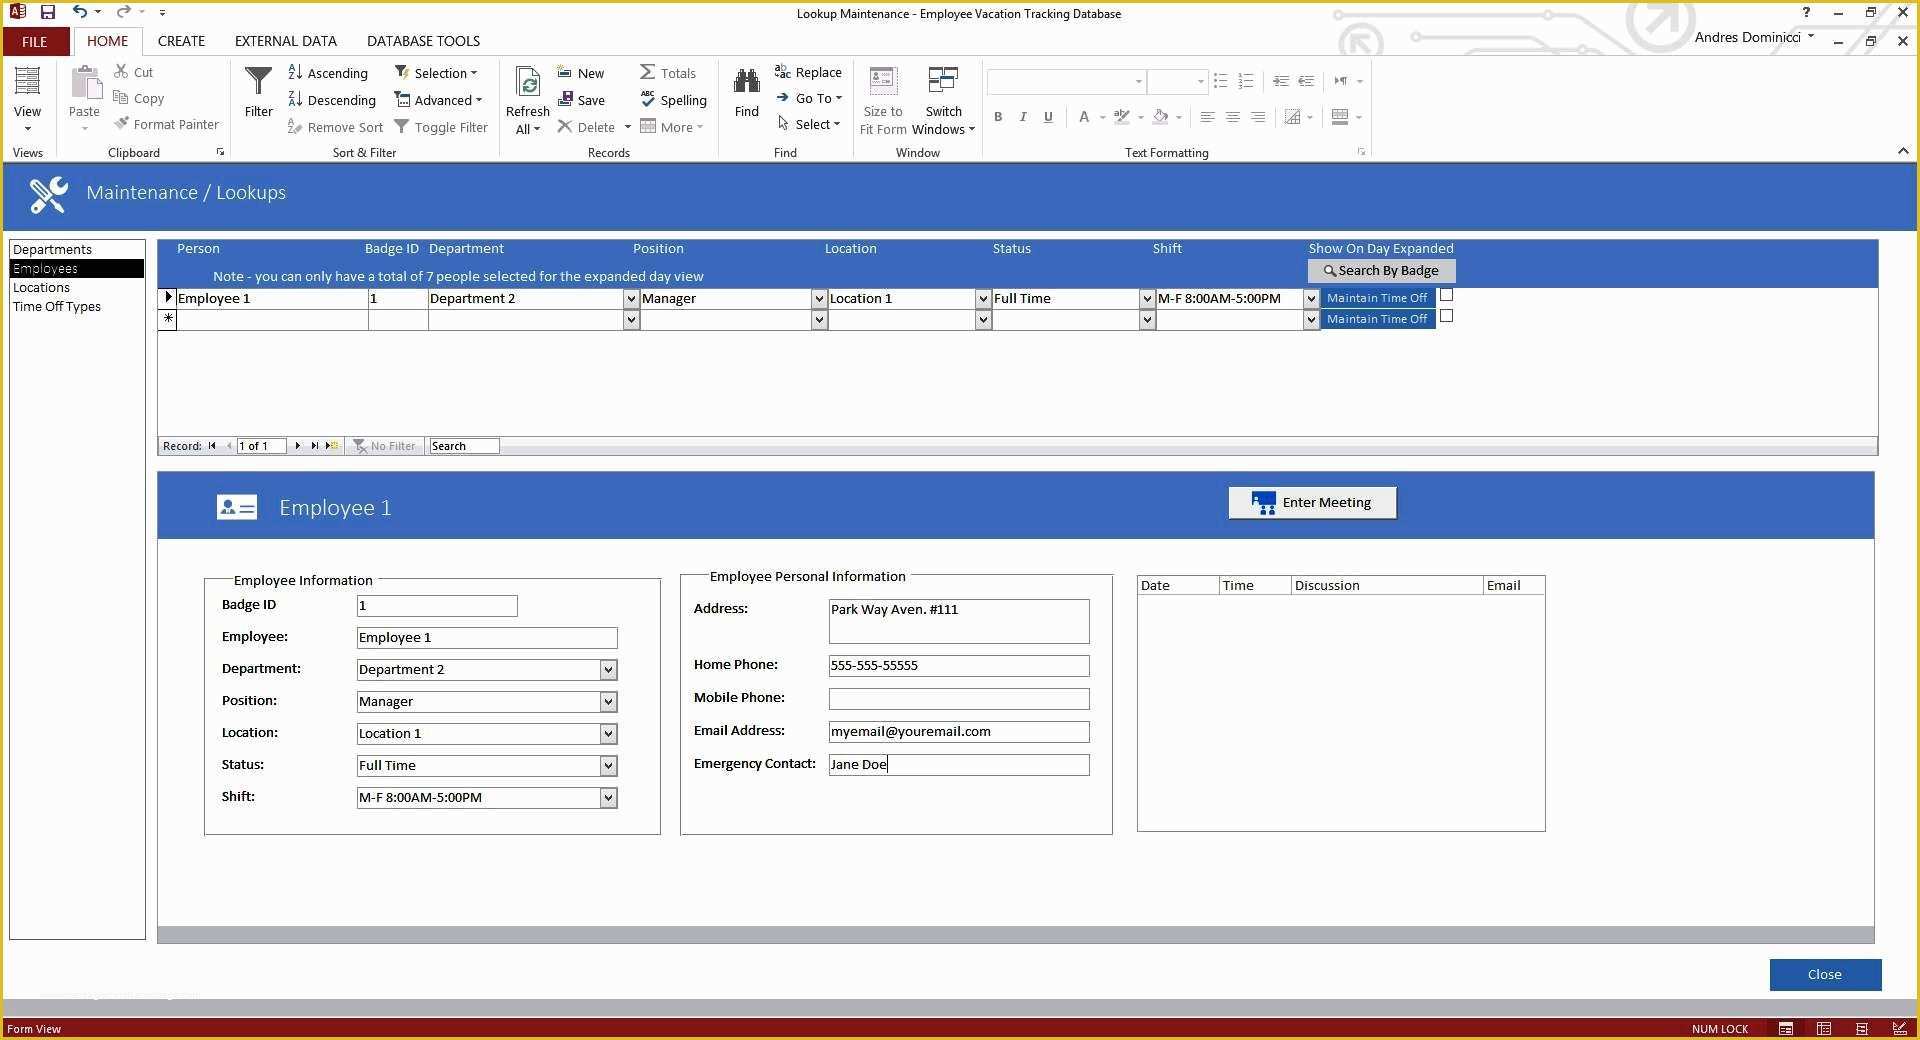 Microsoft Access Employee Training Database Template Free Of Enhanced Employee Vacation Tracking Database Template